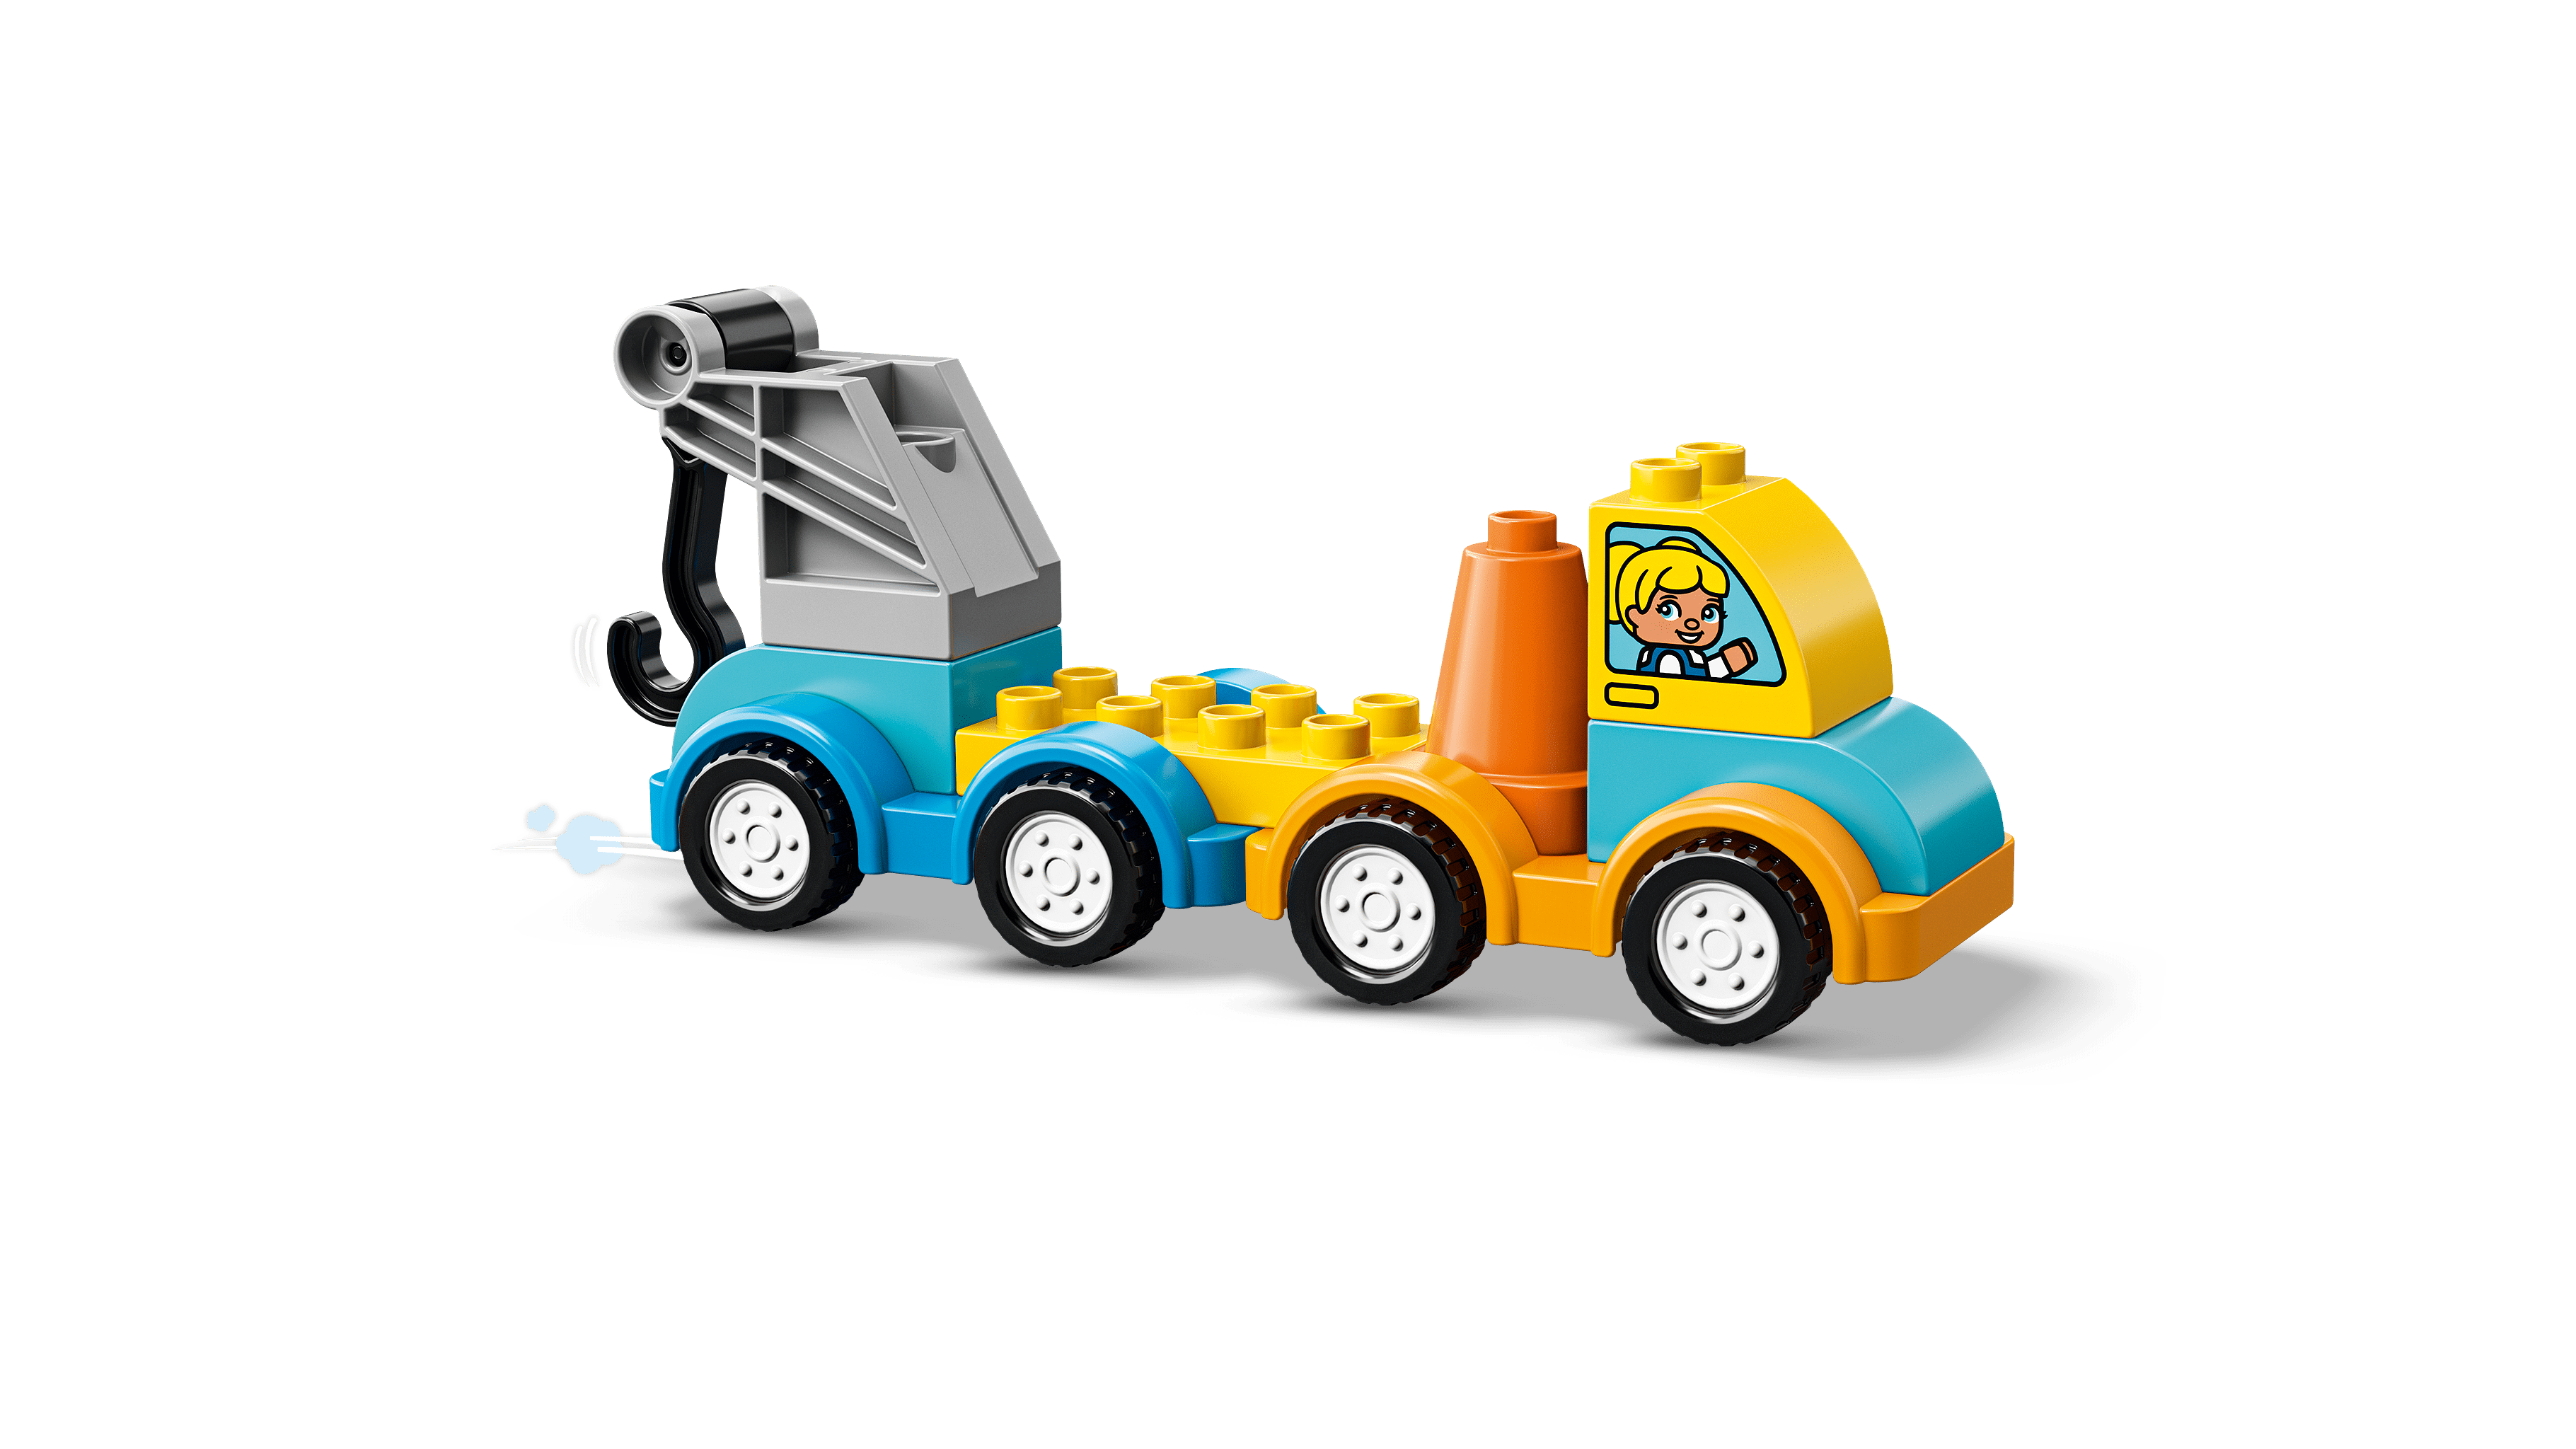 Tow Hook Vehicle LEGO Blue Duplo